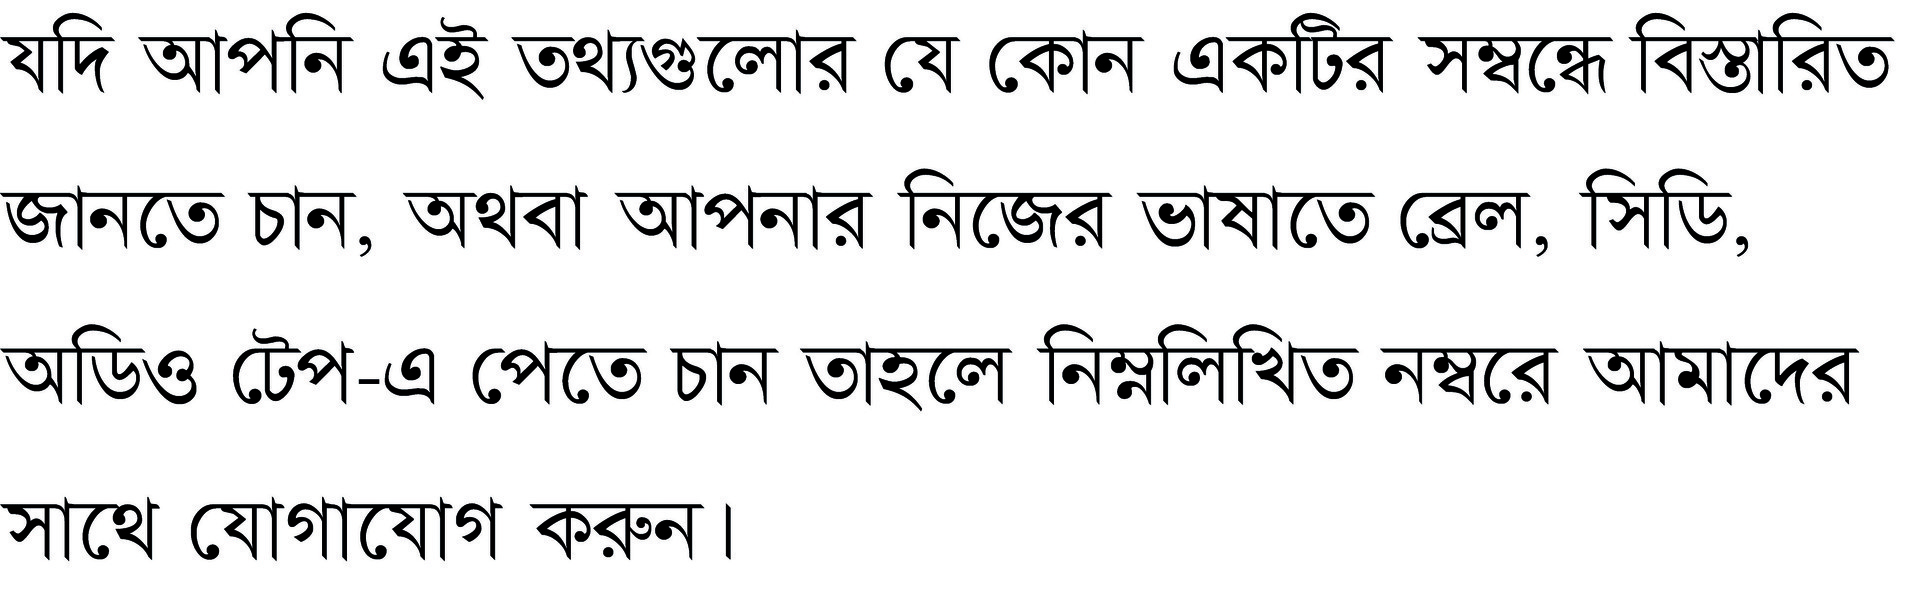 Translation in Bengali 